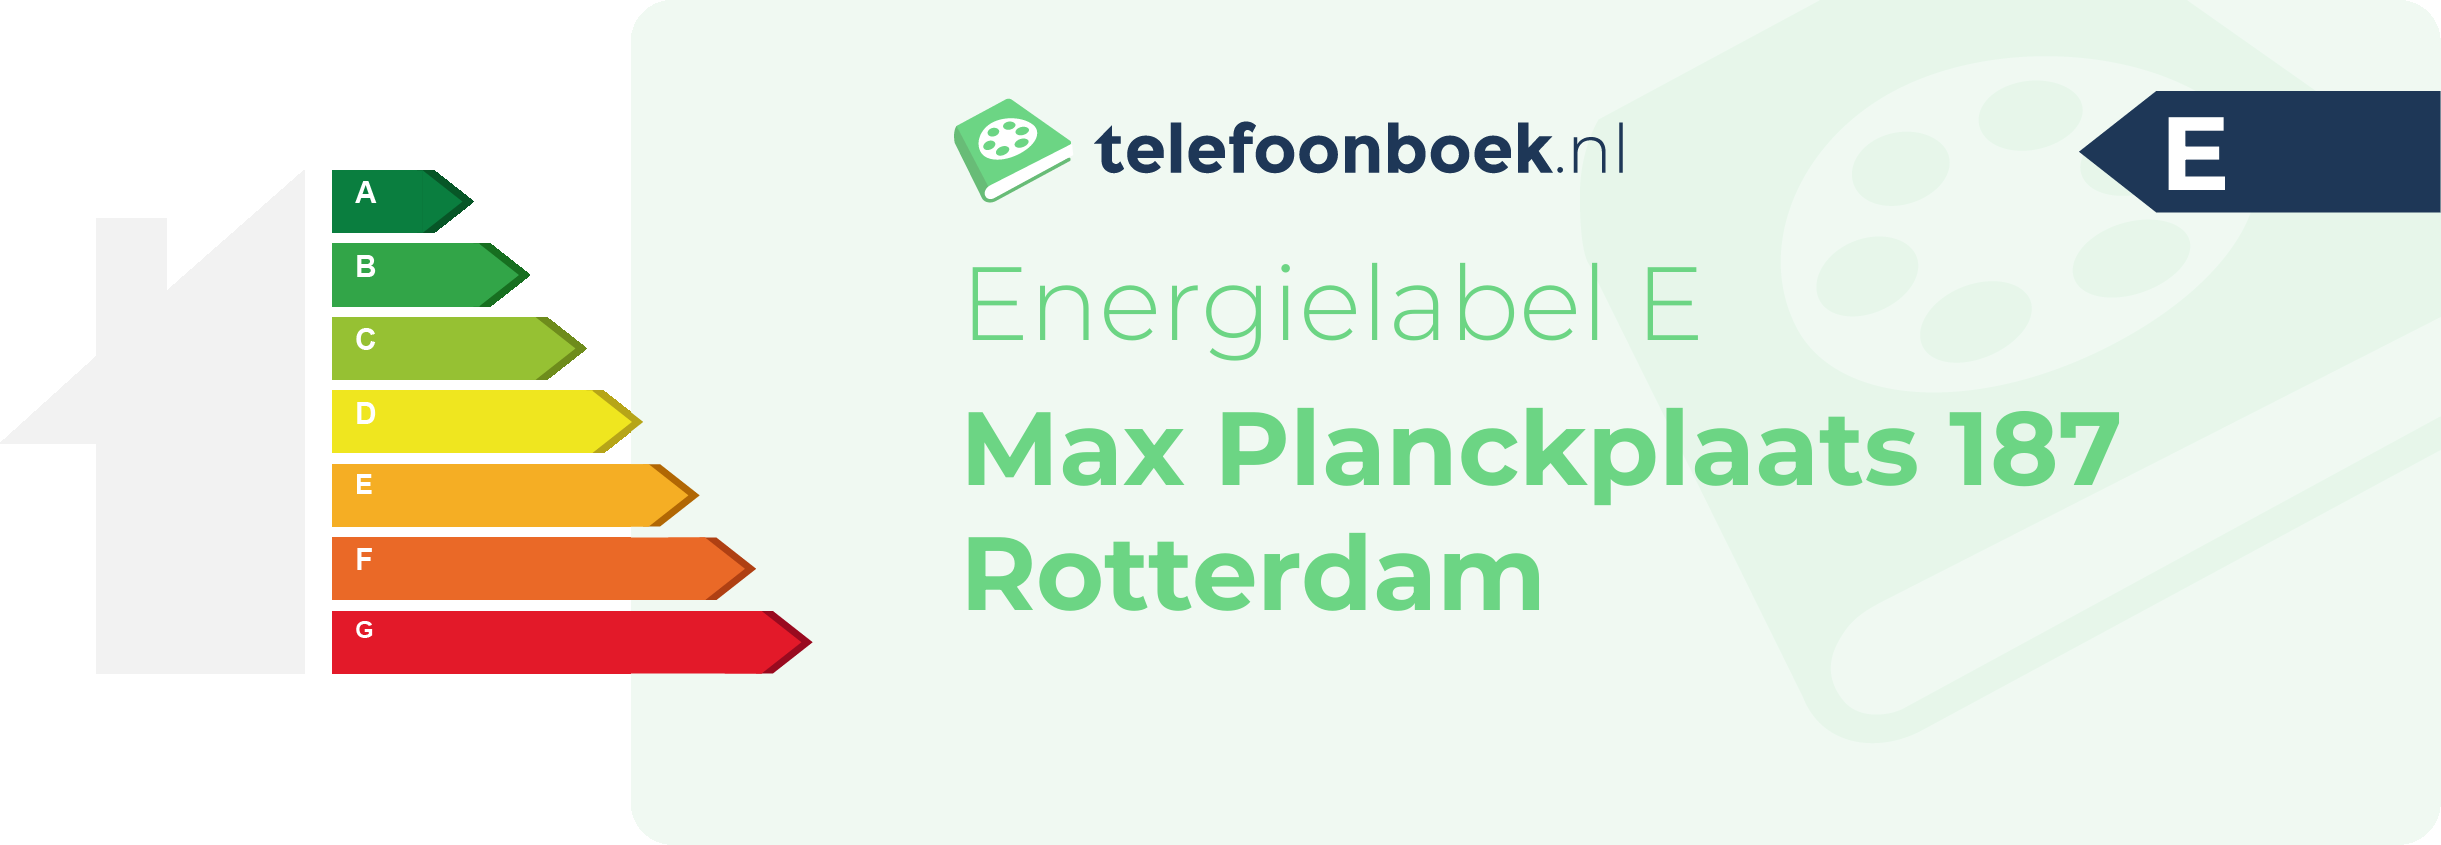 Energielabel Max Planckplaats 187 Rotterdam